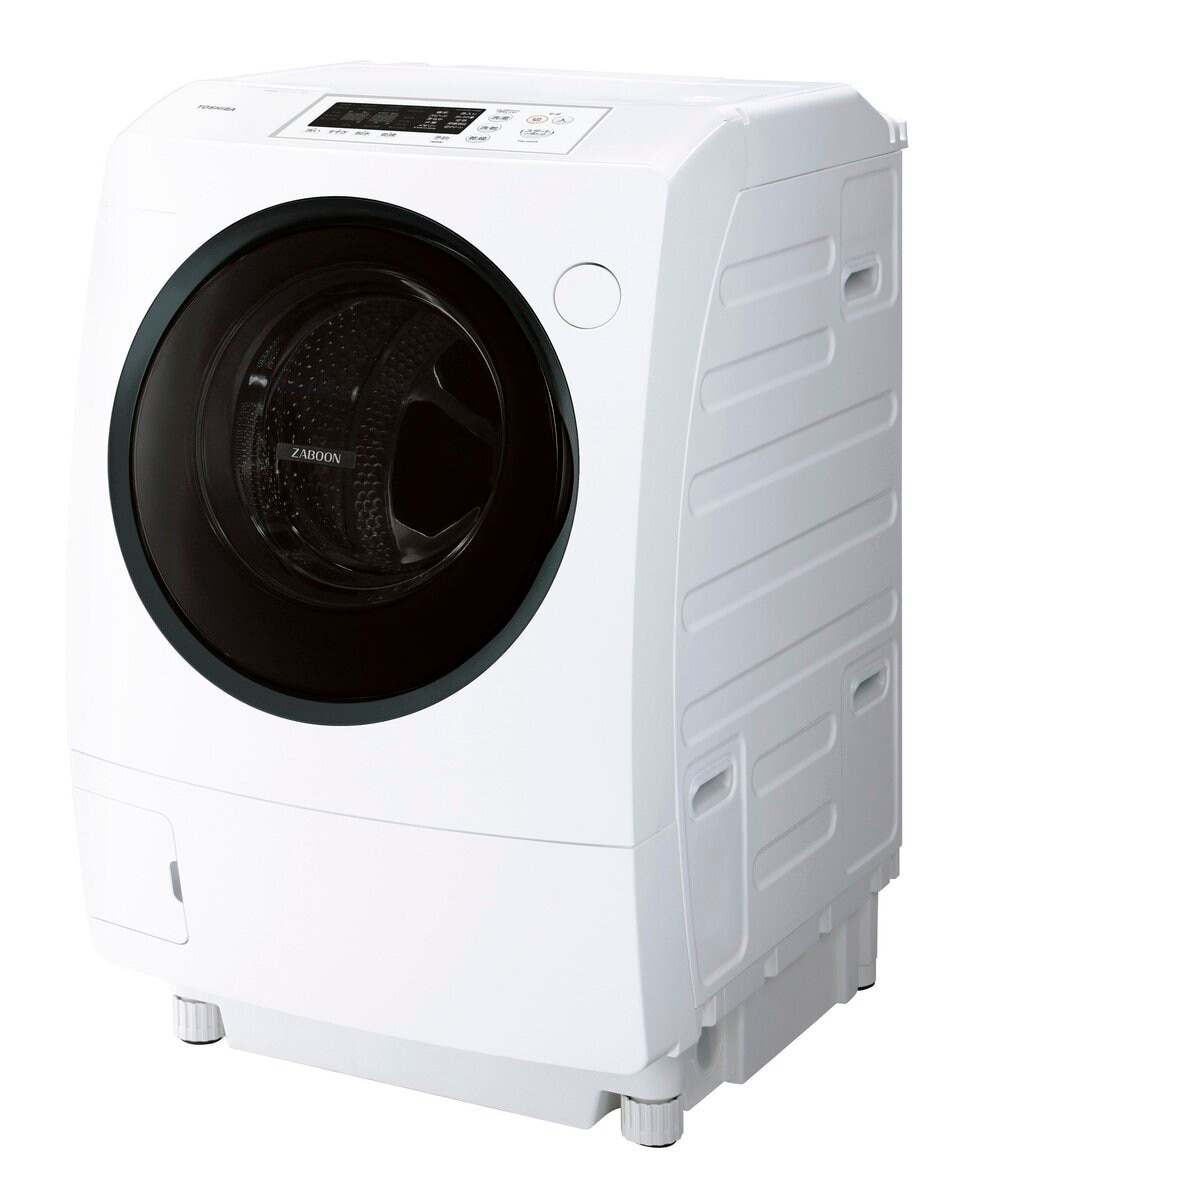 TOSHIBA ZABOON ドラム式洗濯乾燥機 TW-95G9L | Costco Japan